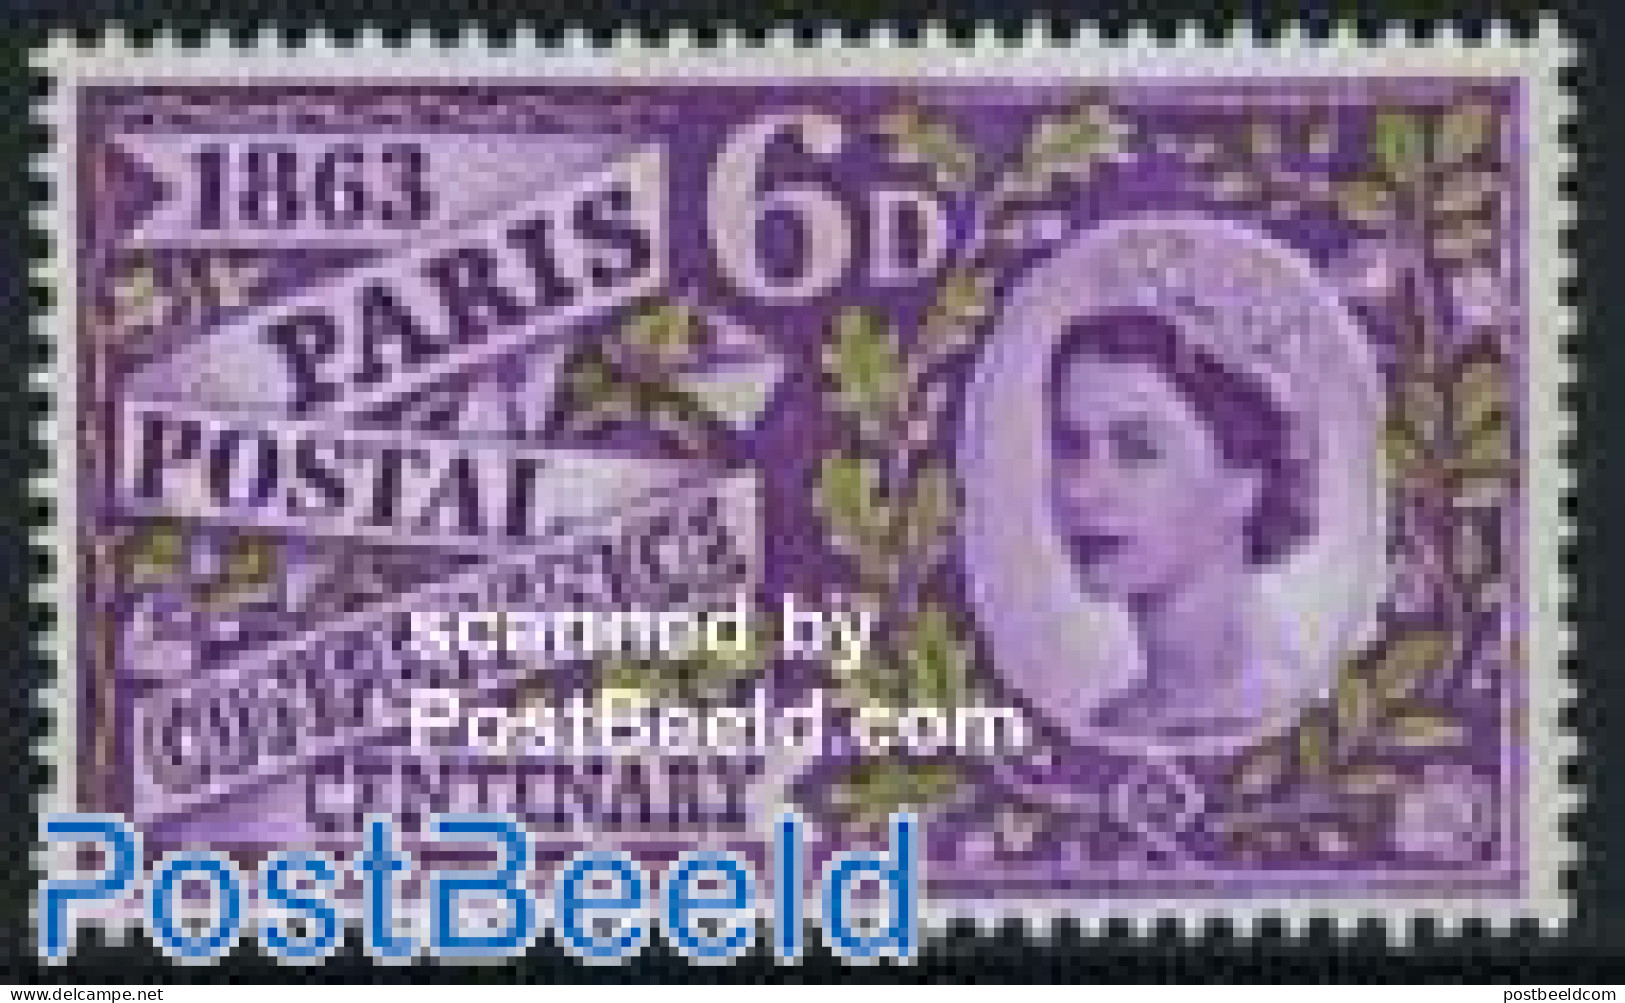 Great Britain 1963 Postal Conference 1v, Phosphor, Mint NH, Post - Unused Stamps